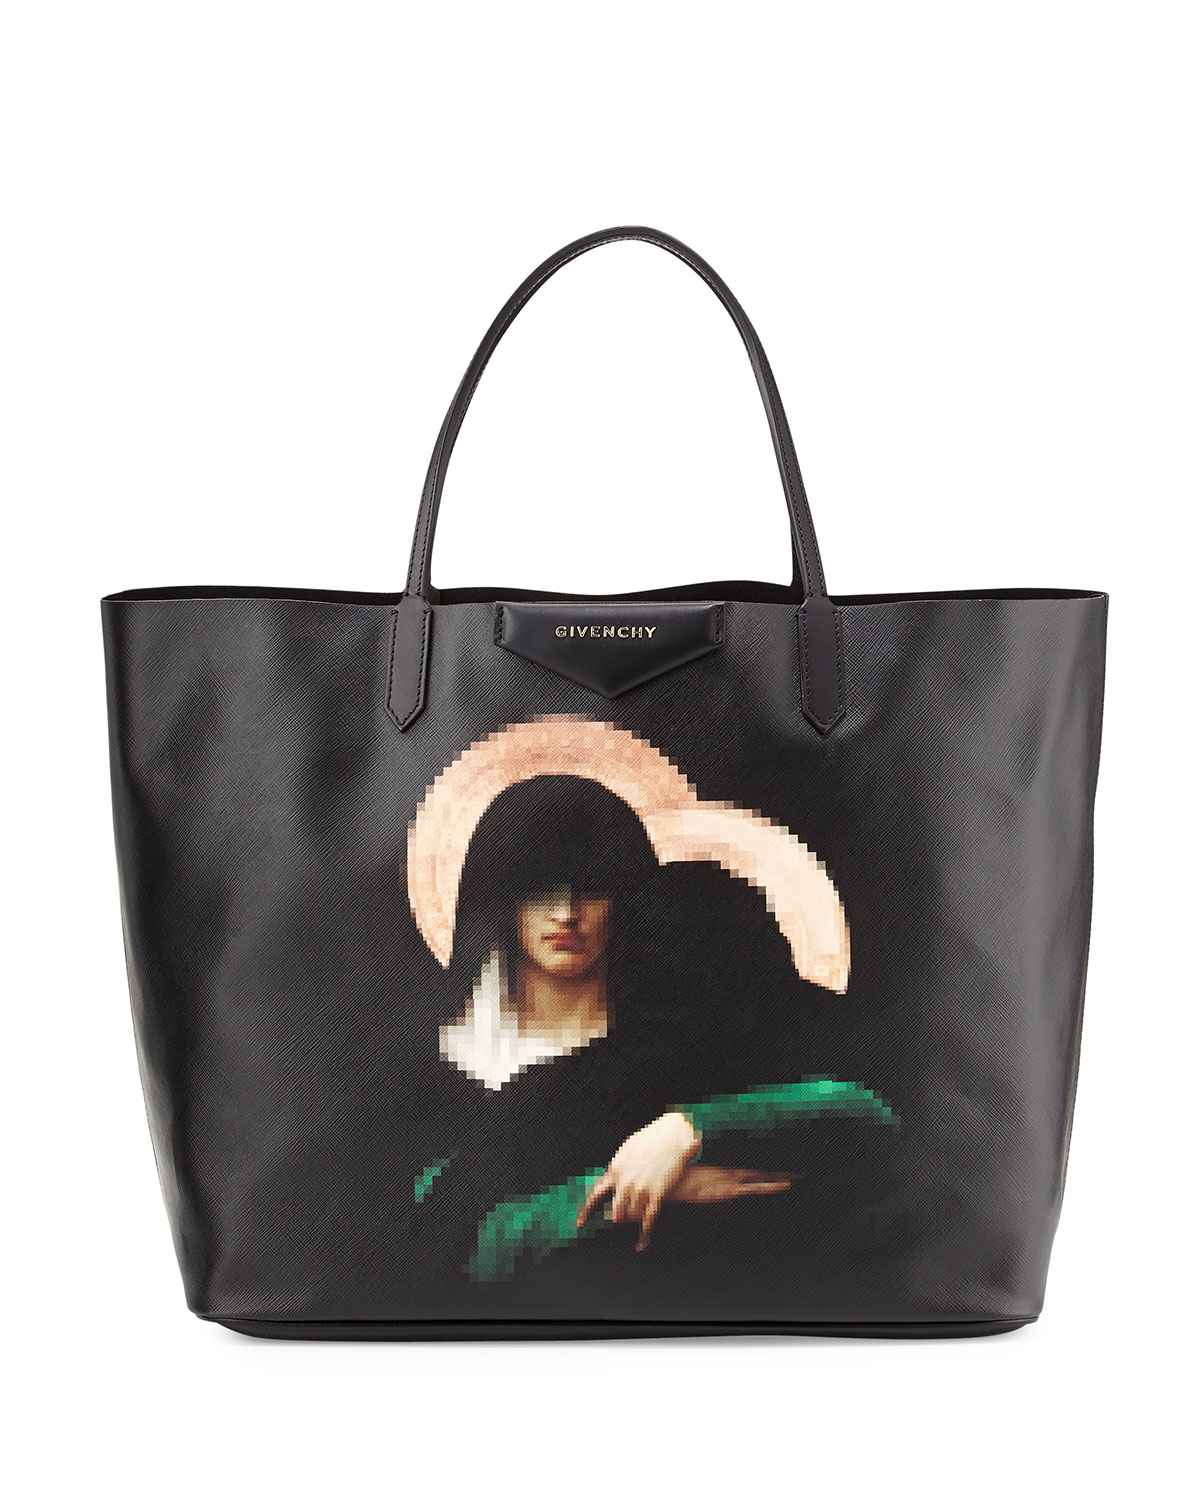 Lyst - Givenchy Antigona Large Madonna Tote Bag in Black